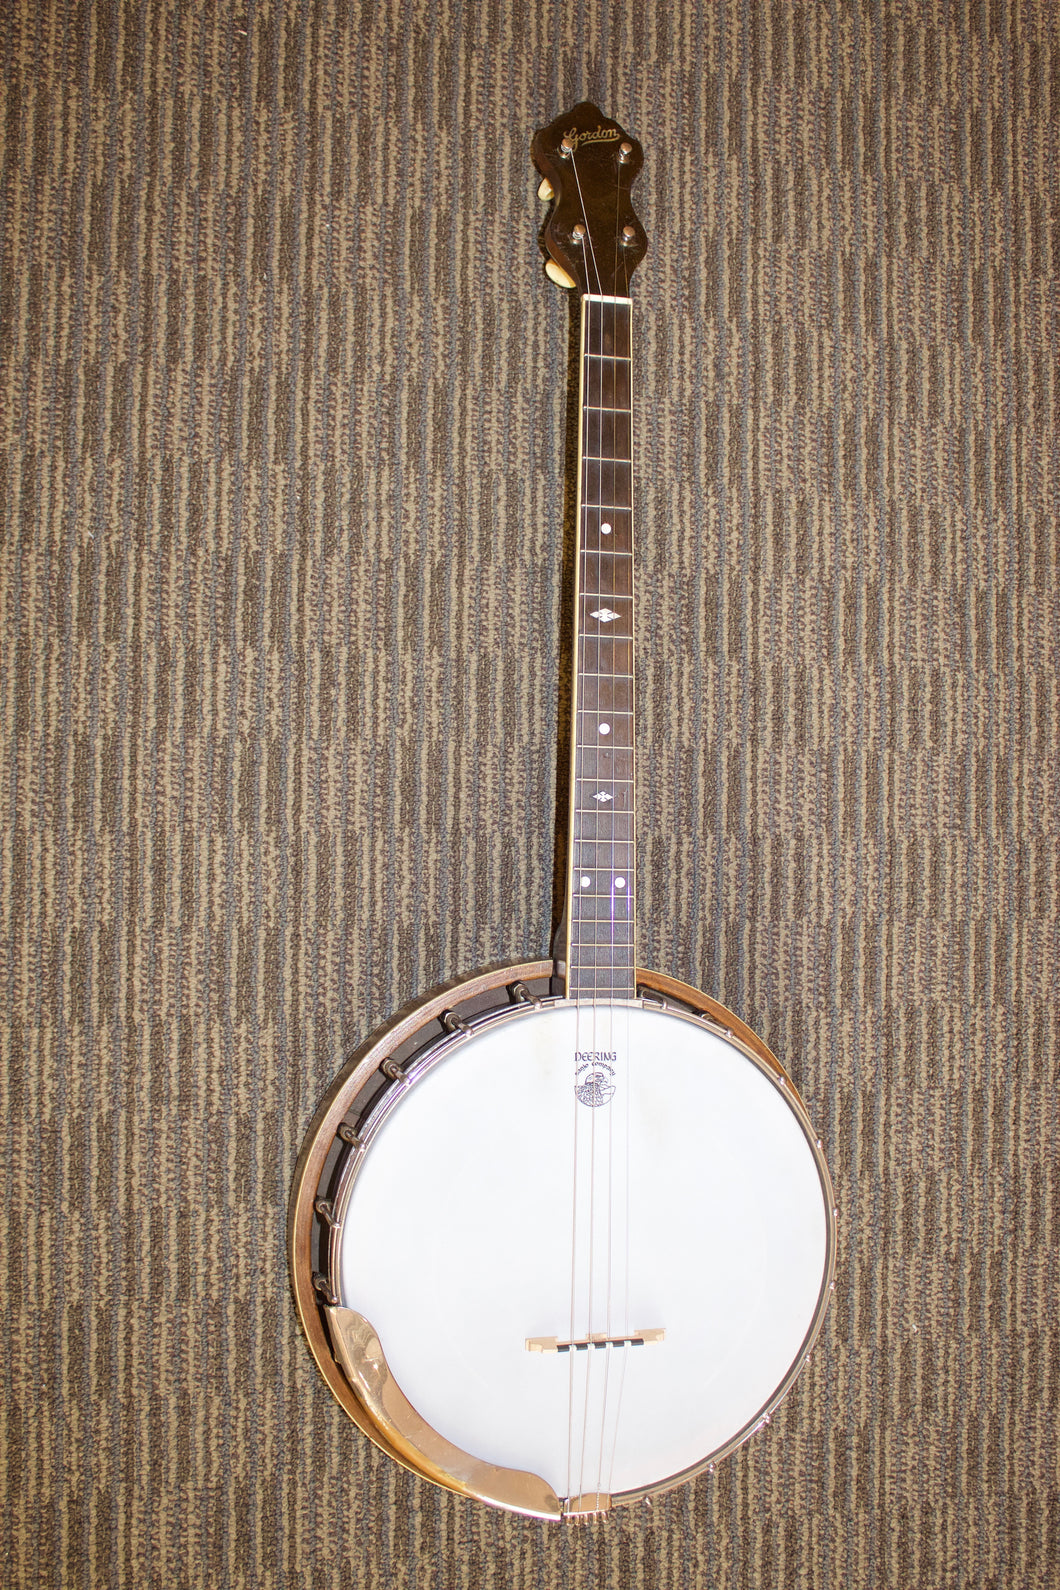 Gordon Tenor Banjo c. 1920s